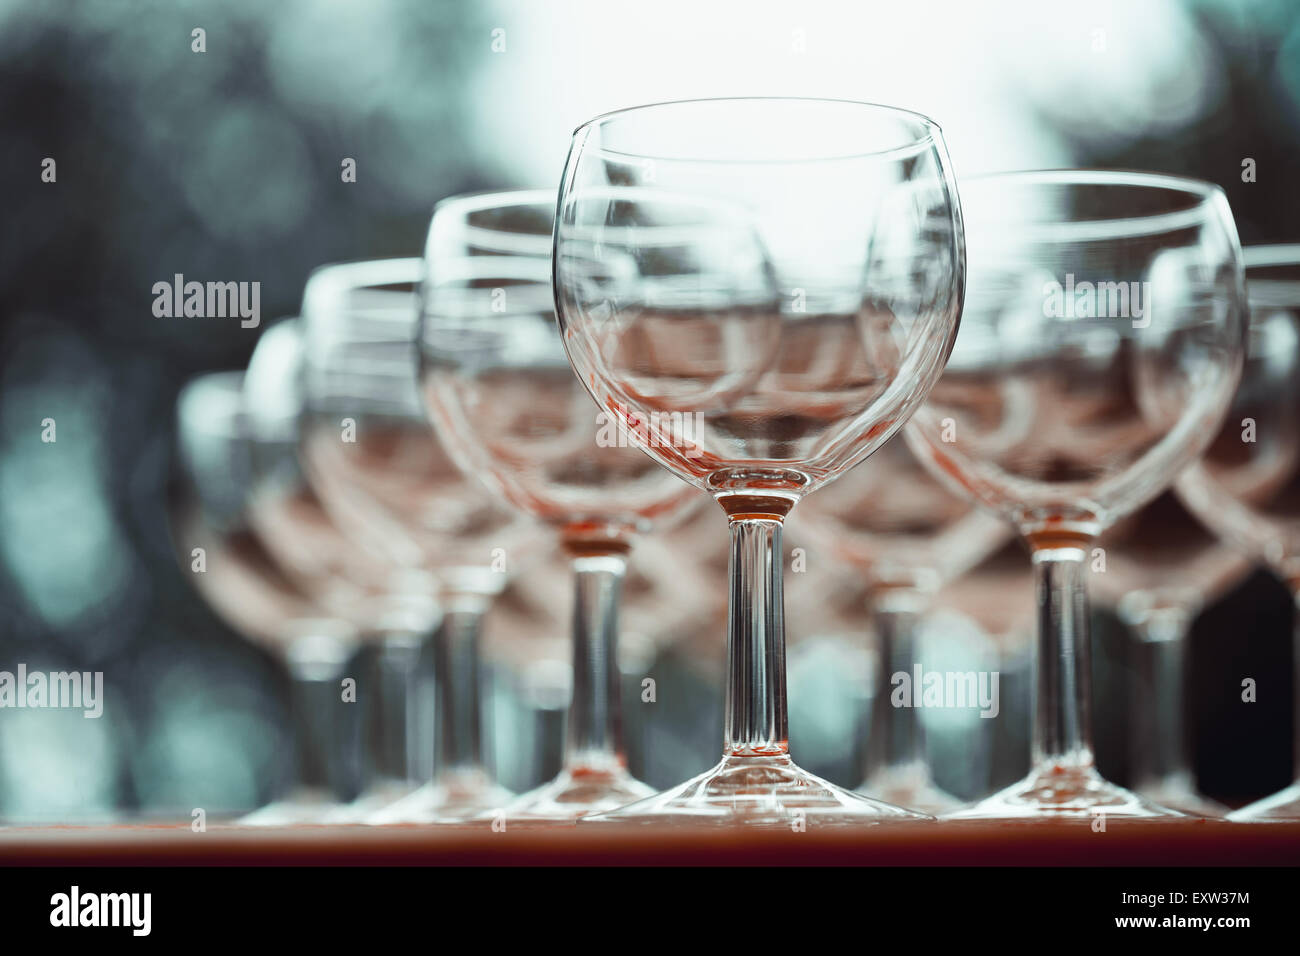 Vintage stylized photo on wine glasses. Selective focus. Stock Photo